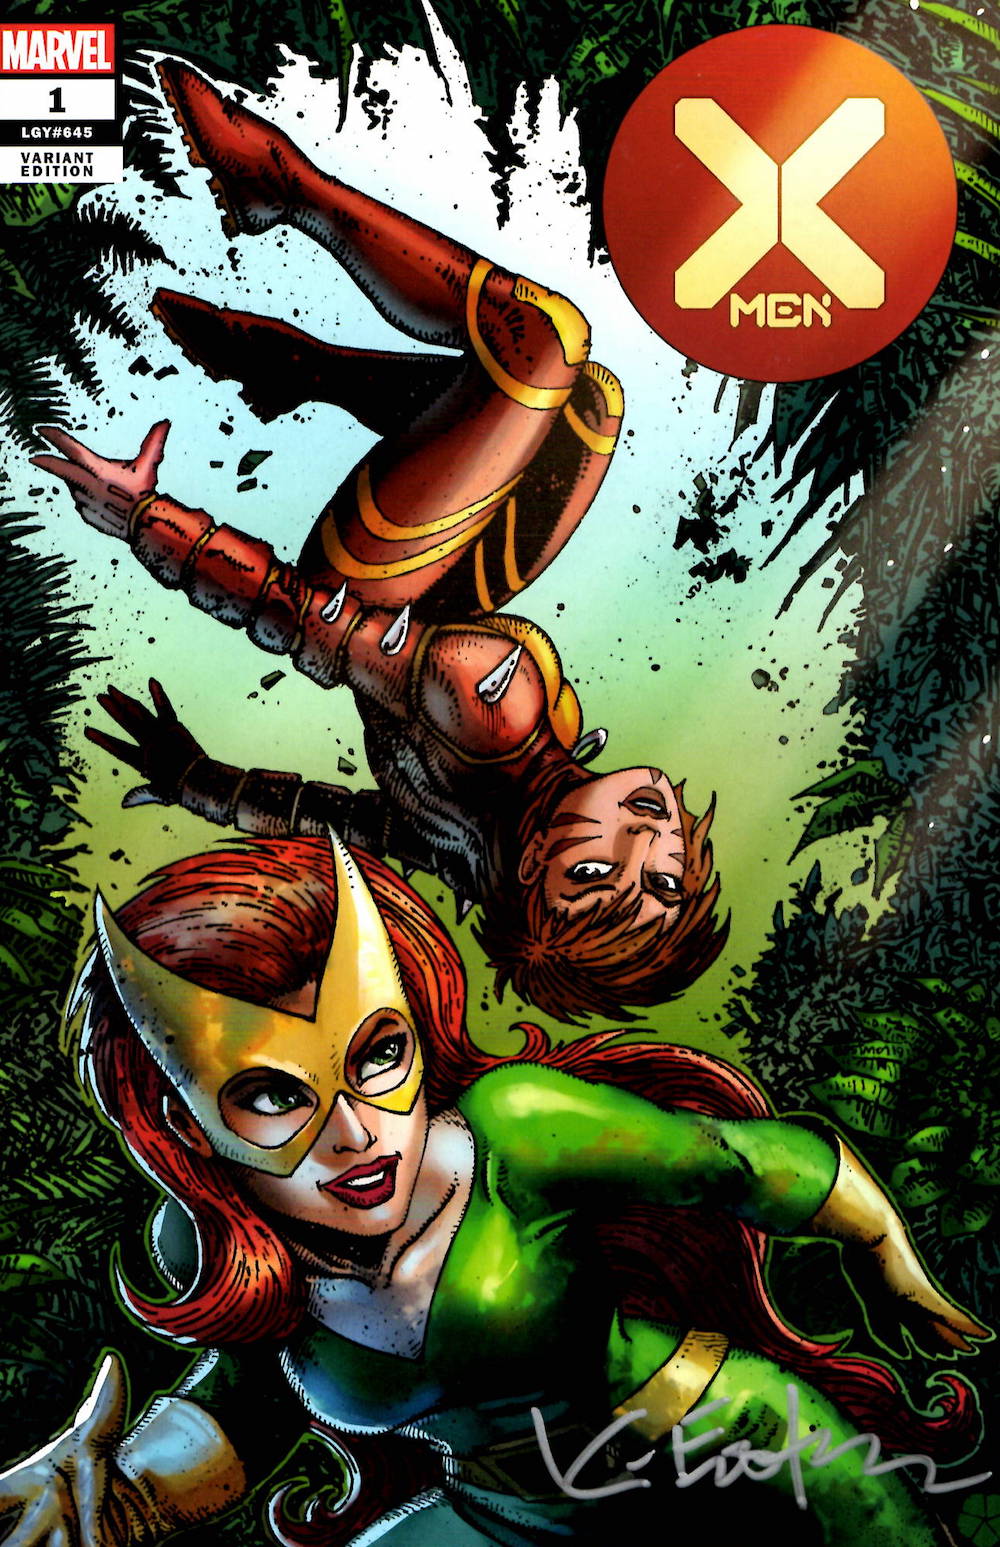 X-MEN Issue 1 – COVER ROUGH B